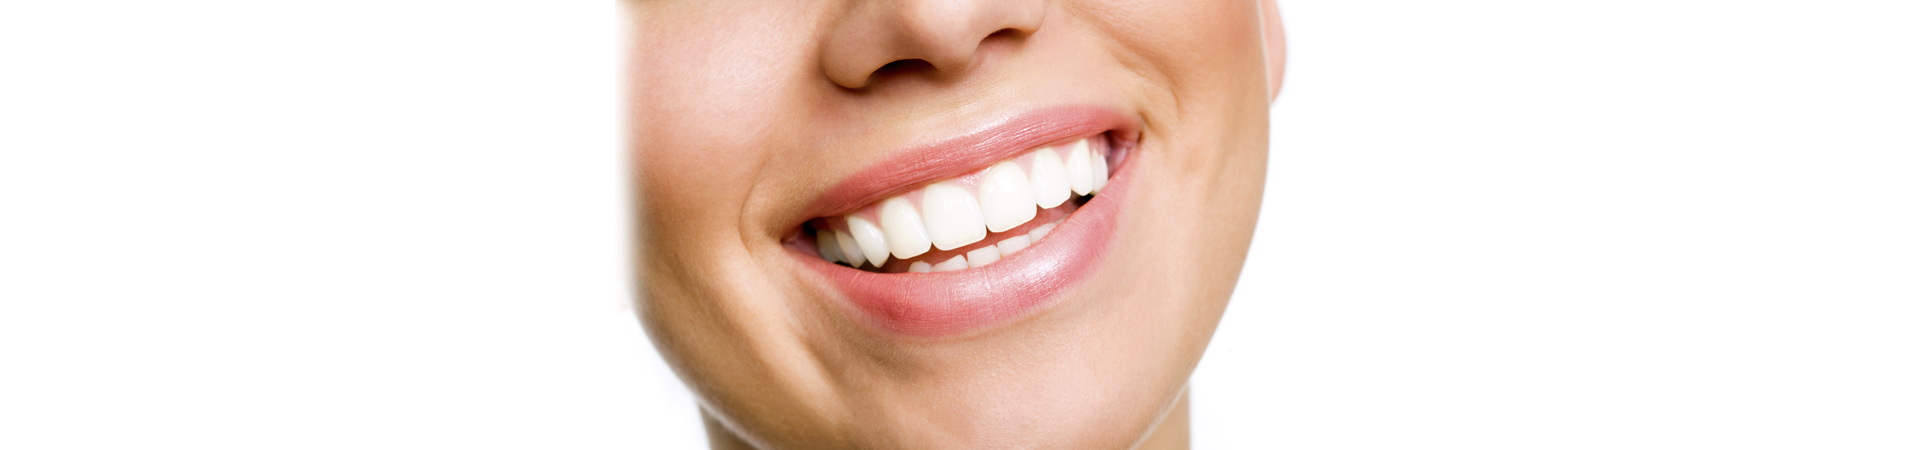 Gum Disease: Symptoms and Treatment